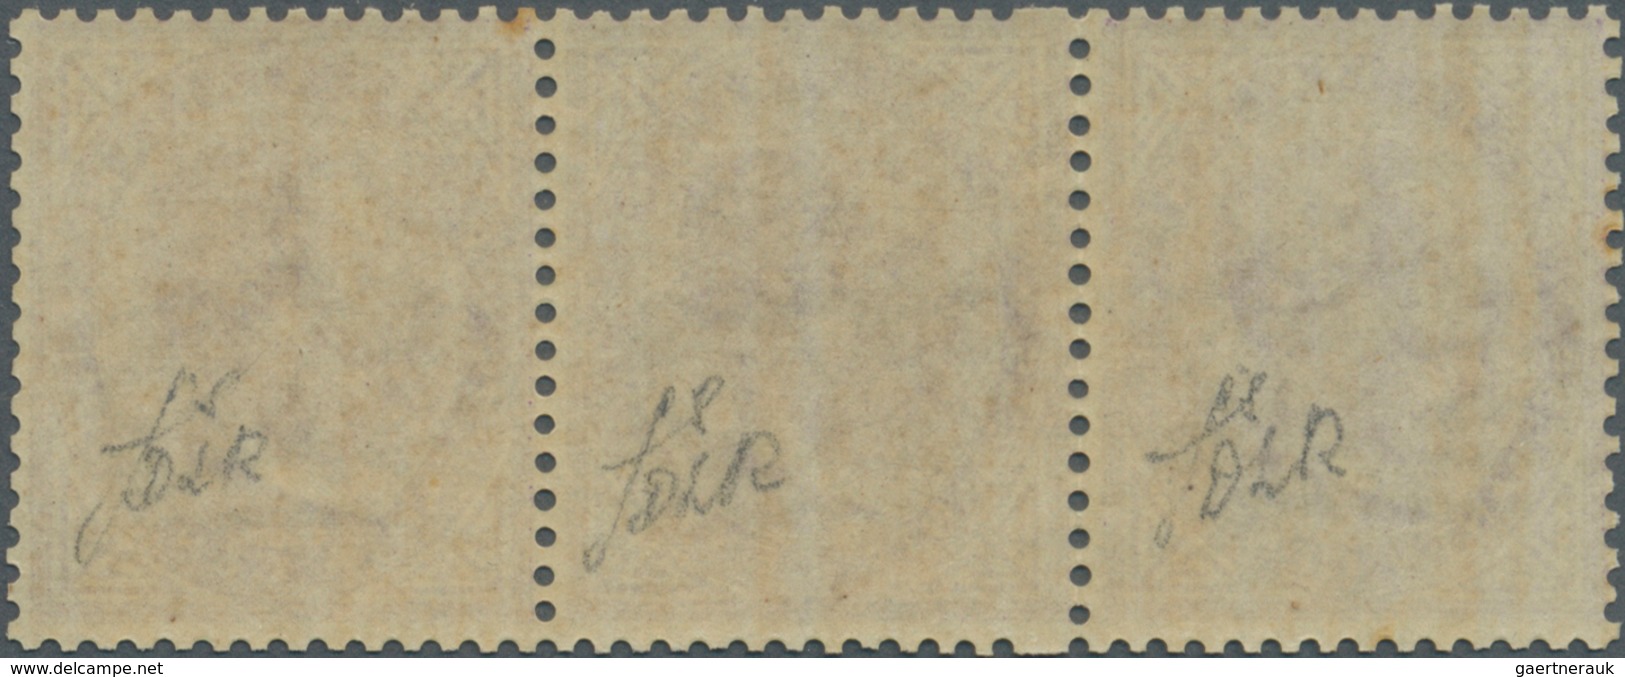 Italien: 1863, 60c. Violet, London Printing, Fresh Colour, Horizontal Strip Of Three, Good Centering - Mint/hinged